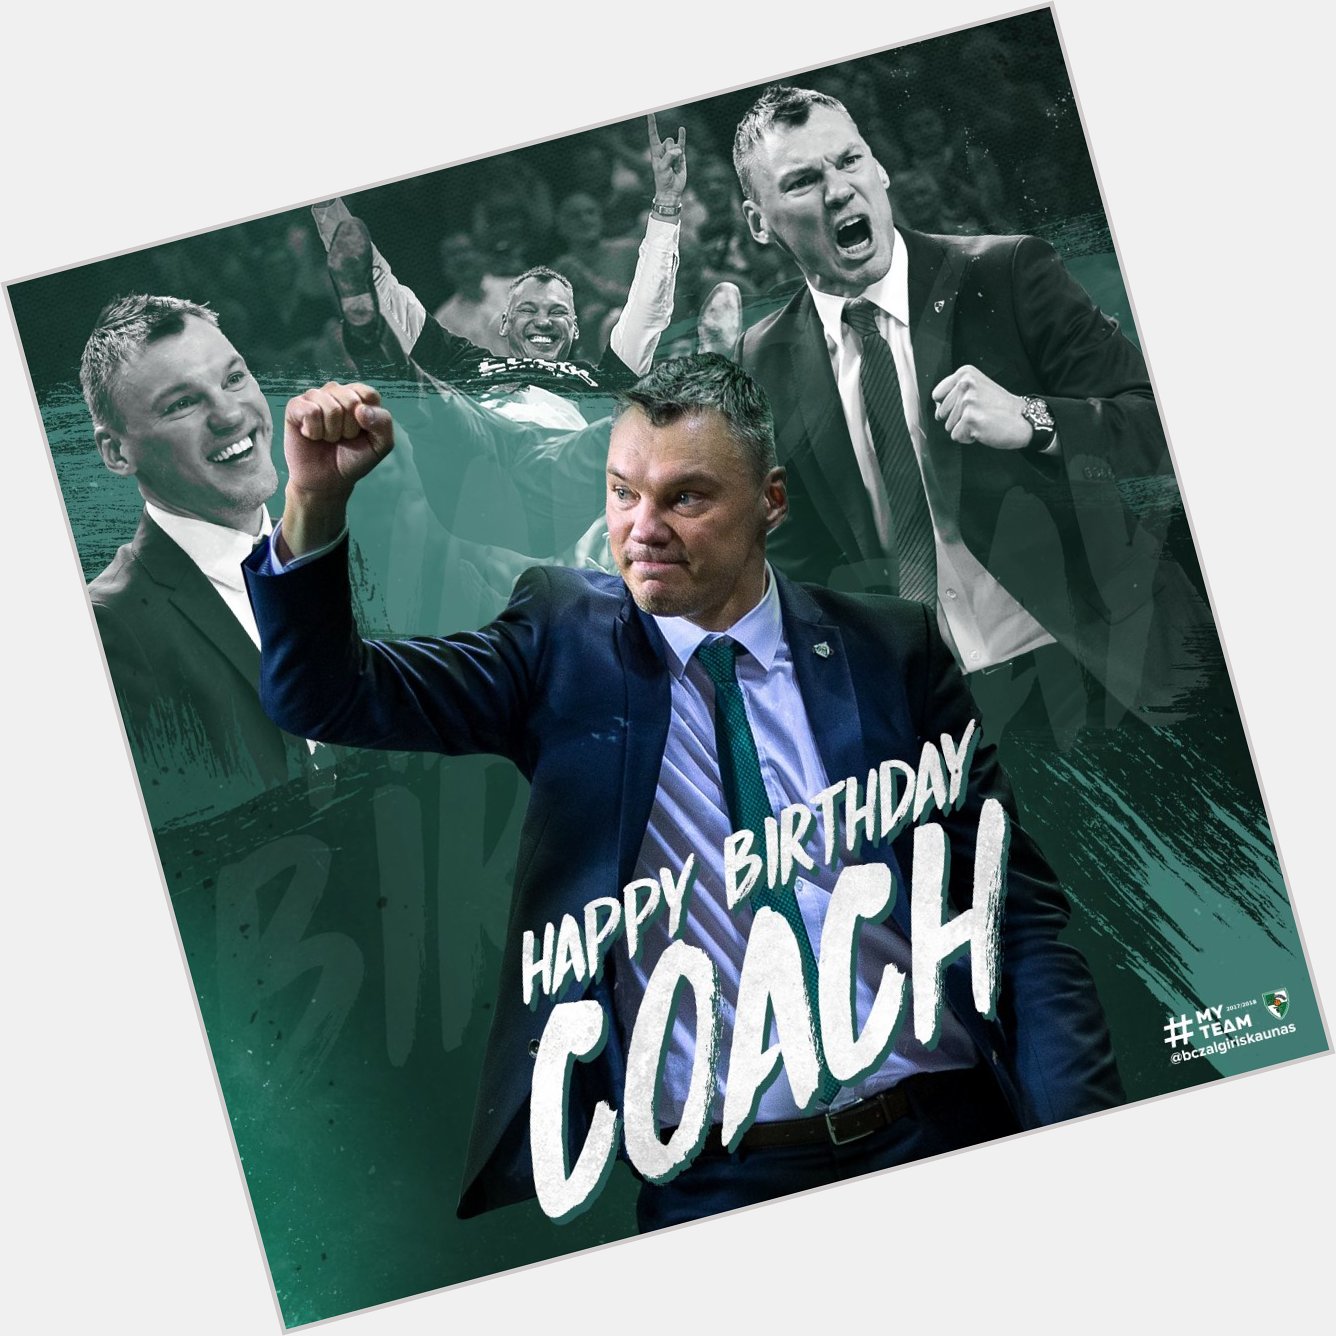  head coach Sarunas celebrates his birthday today. Happy birthday, coach!!!  